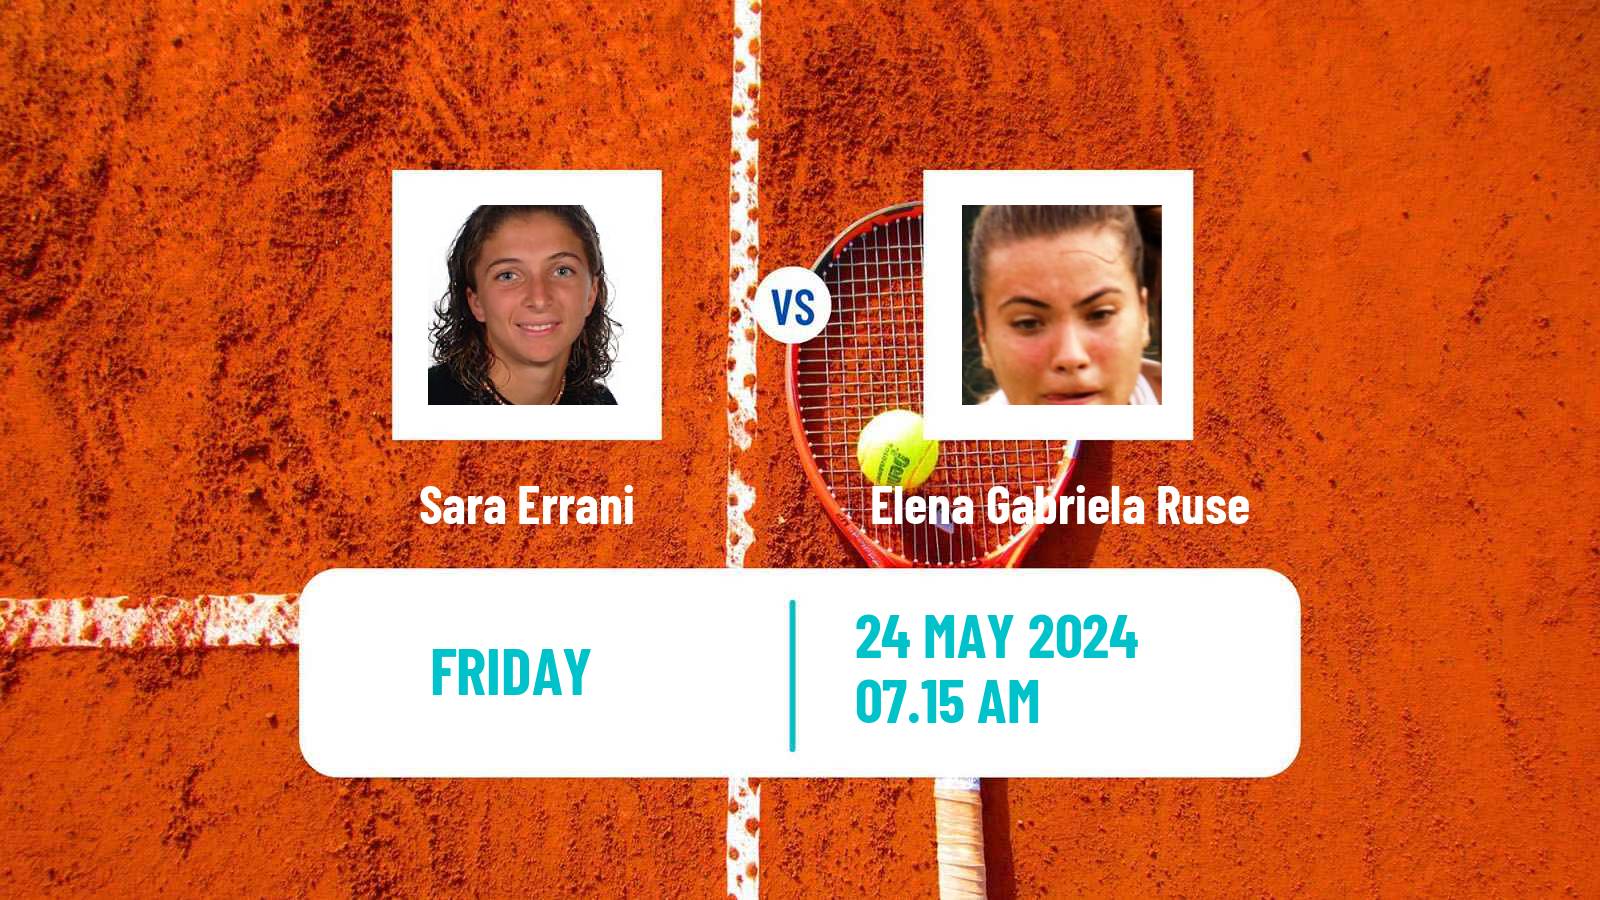 Tennis WTA Roland Garros Sara Errani - Elena Gabriela Ruse